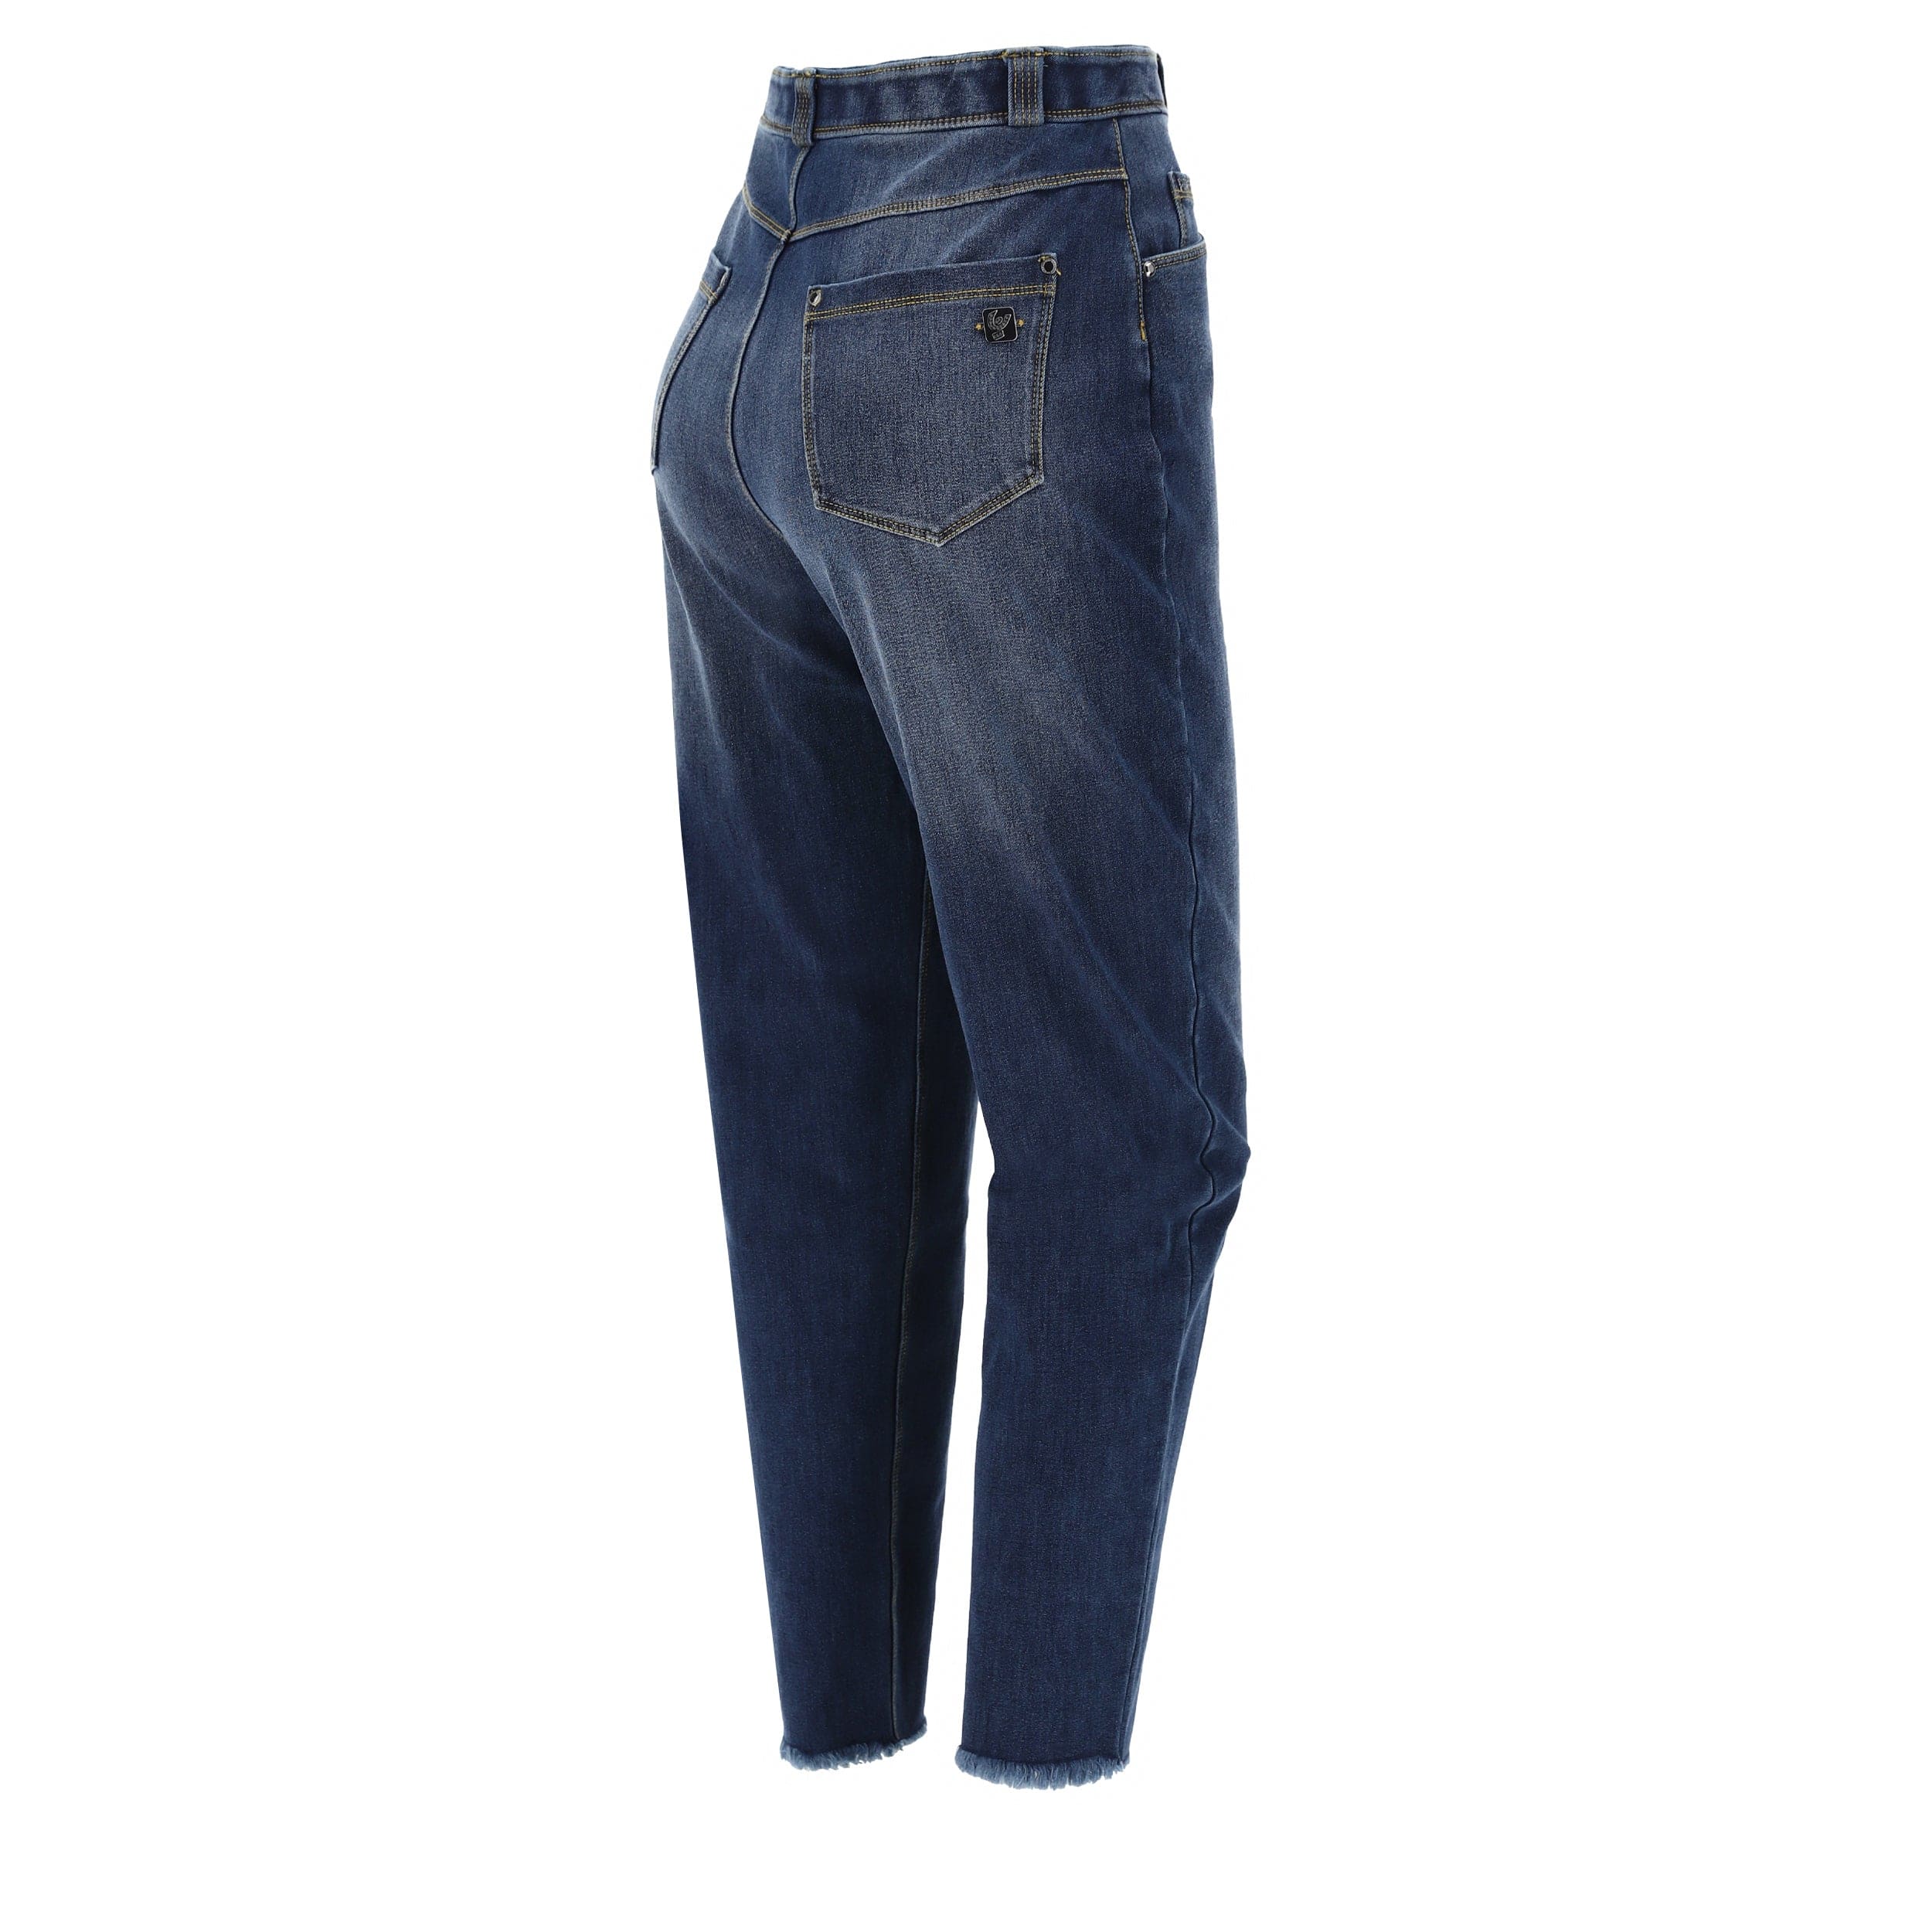 BLACK Denim Mum Jeans - High Waist - 7/8 Length - Dark Blue + Yellow Stitching 1